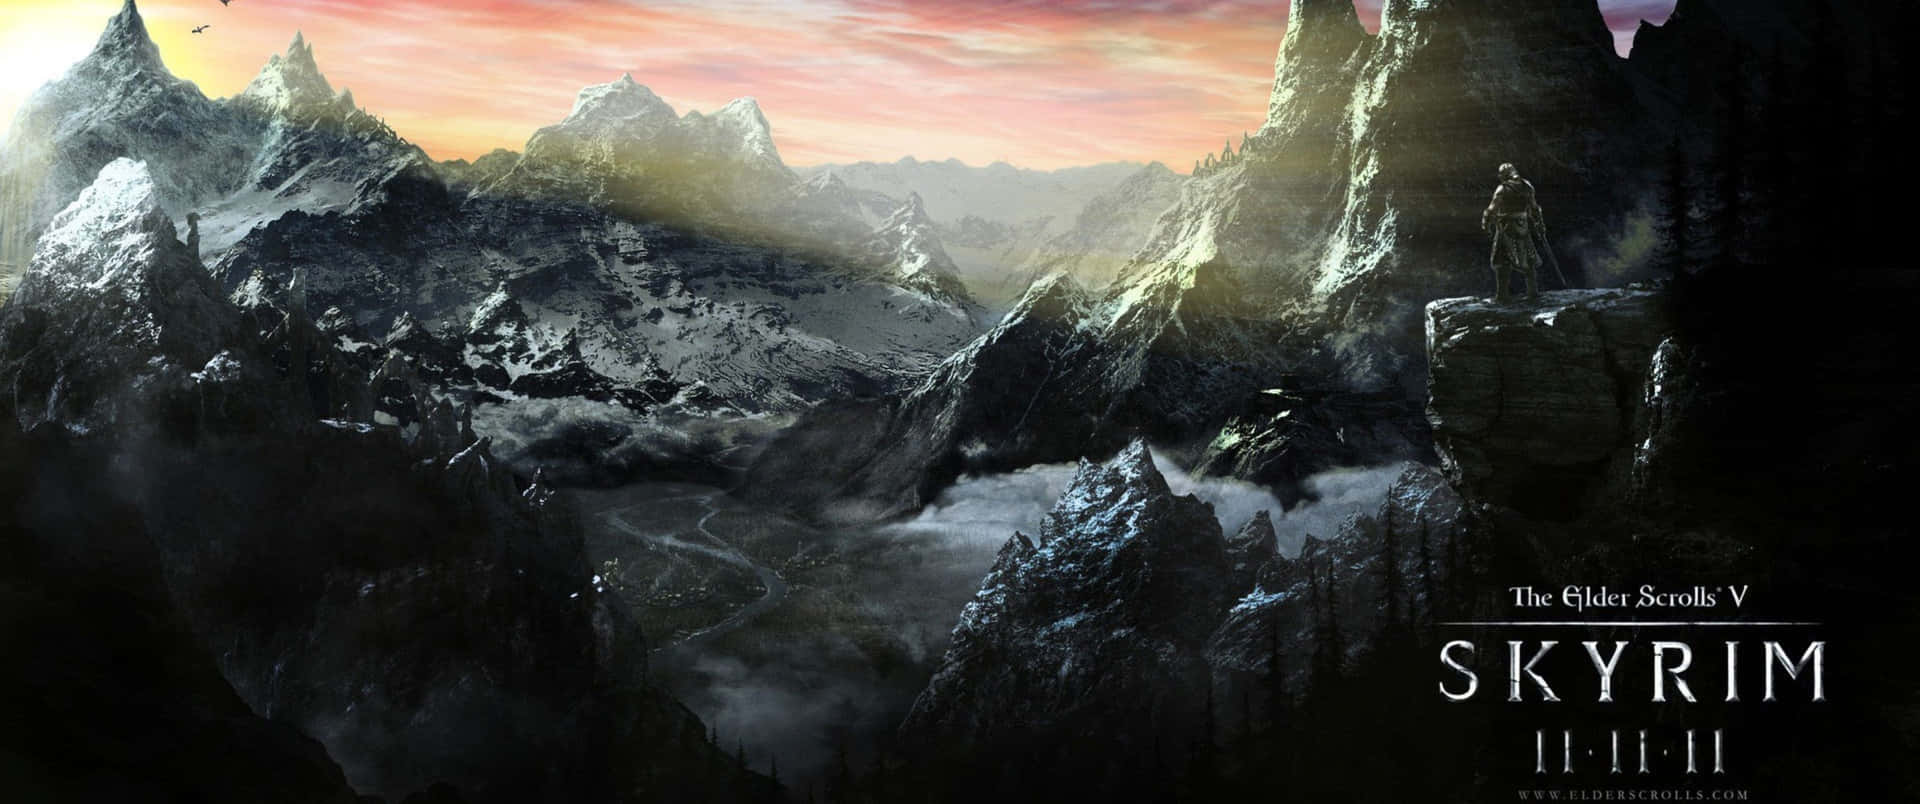 Adventure into the world of The Elder Scrolls V Skyrim